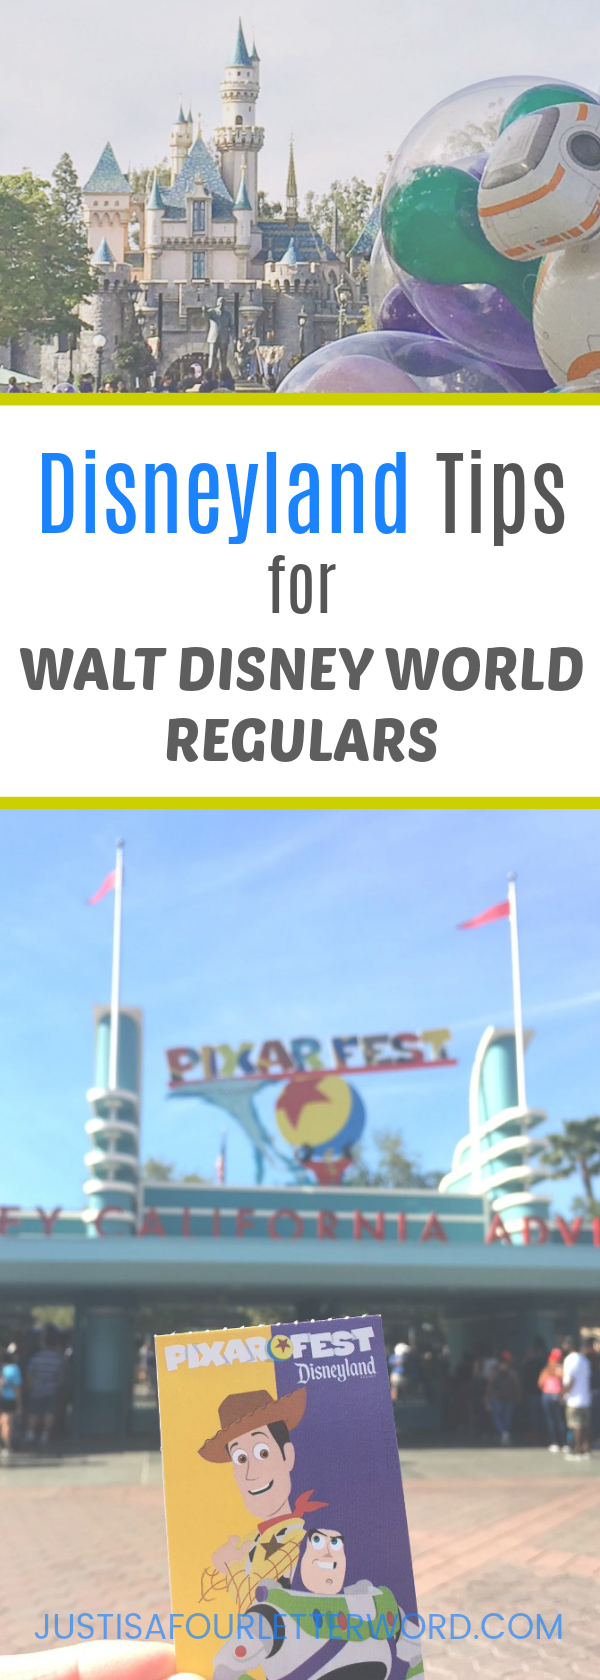 Disneyland tips for Walt Disney World Regulars